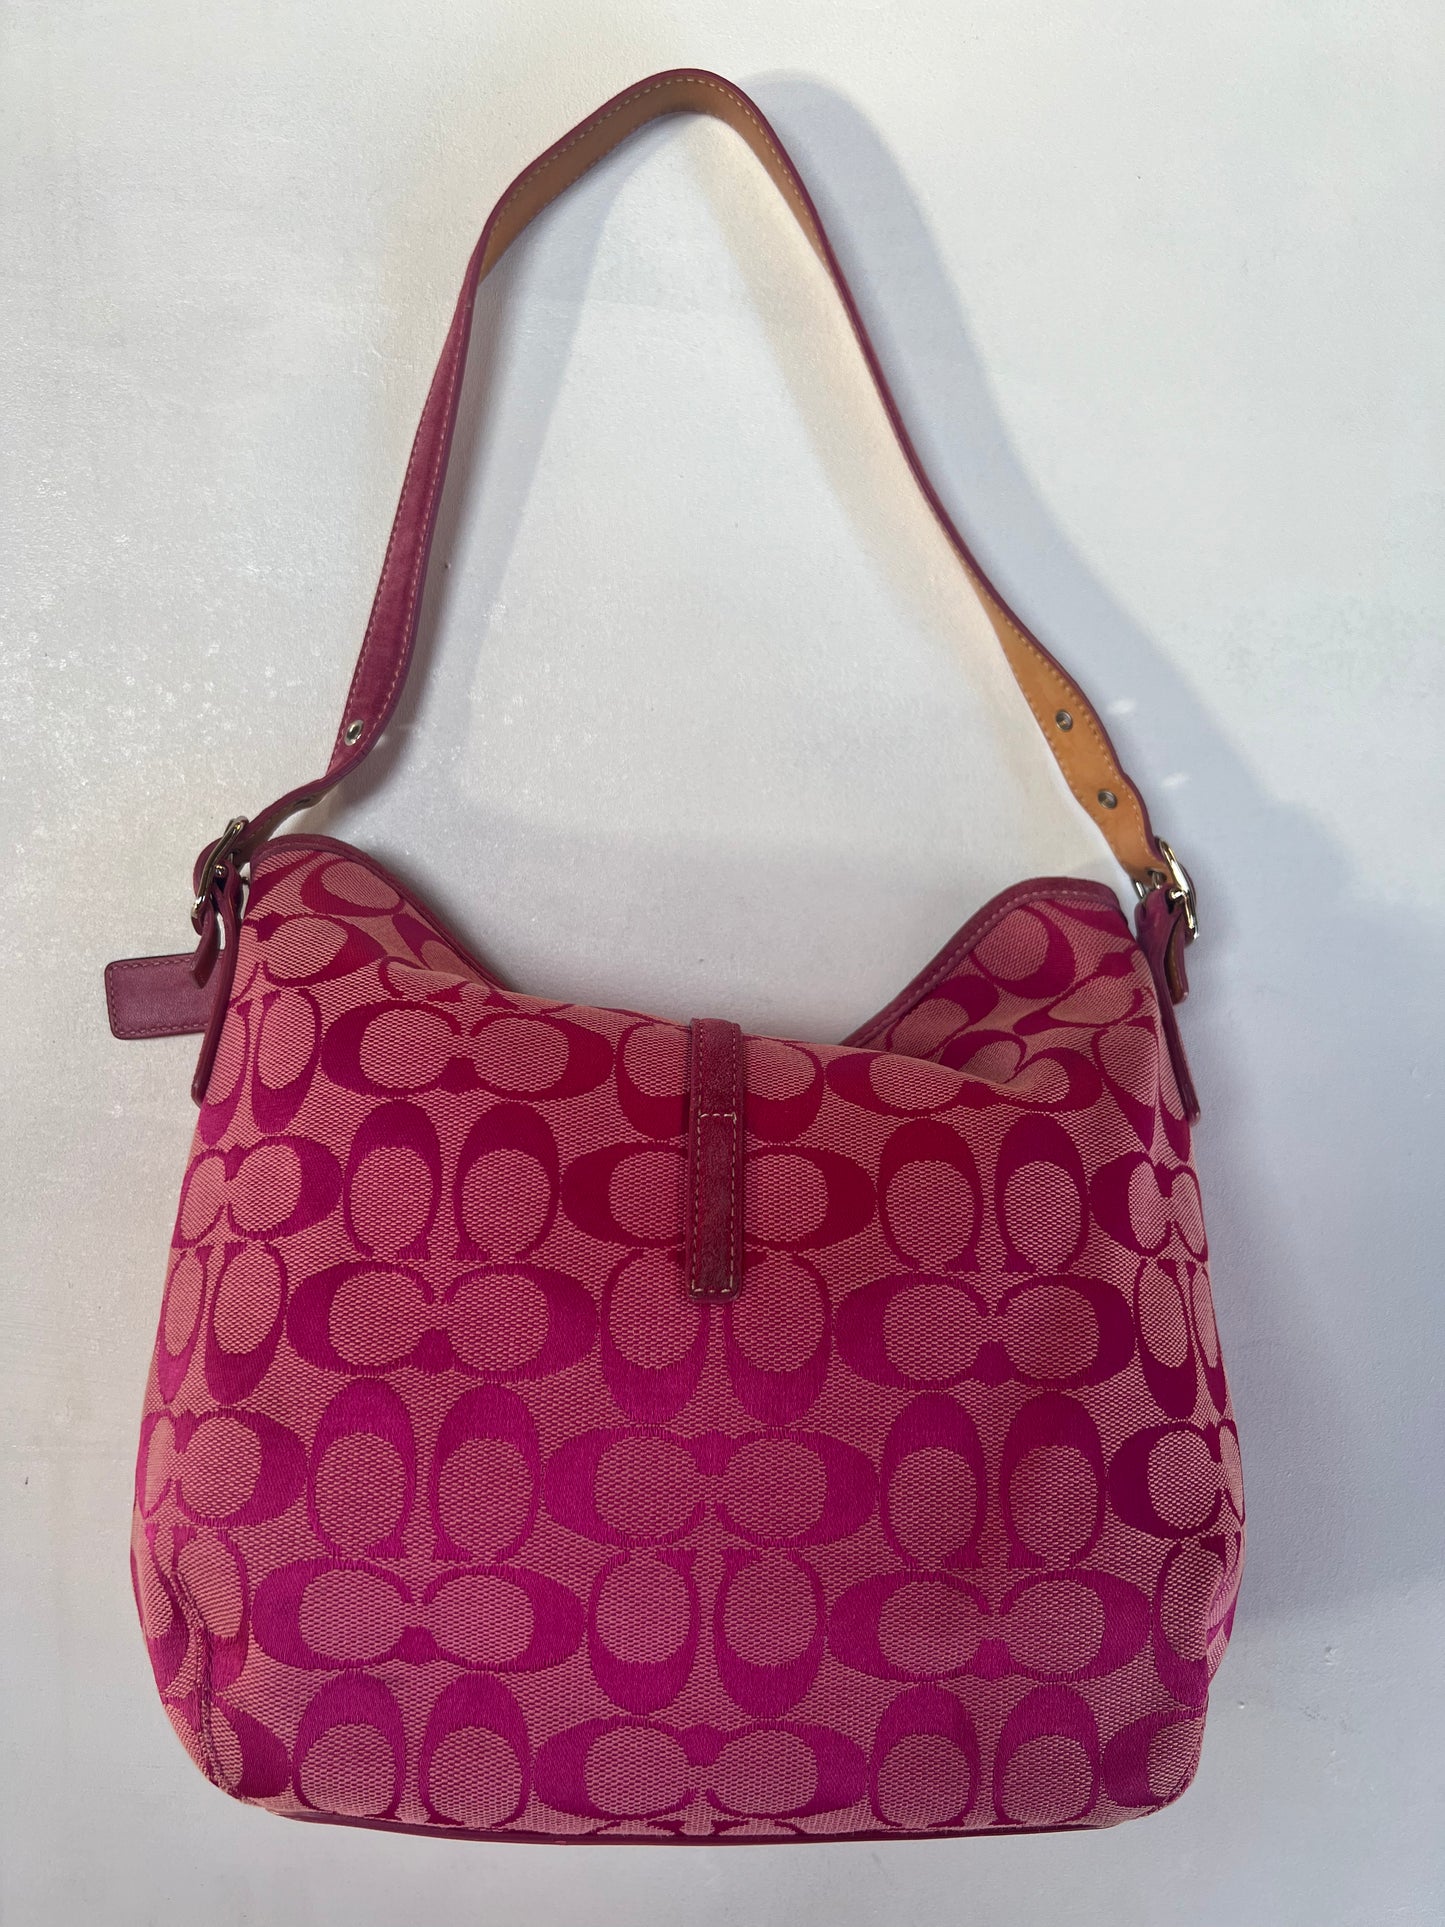 '04 COACH Signature Canvas Hobo Handbag - Pink